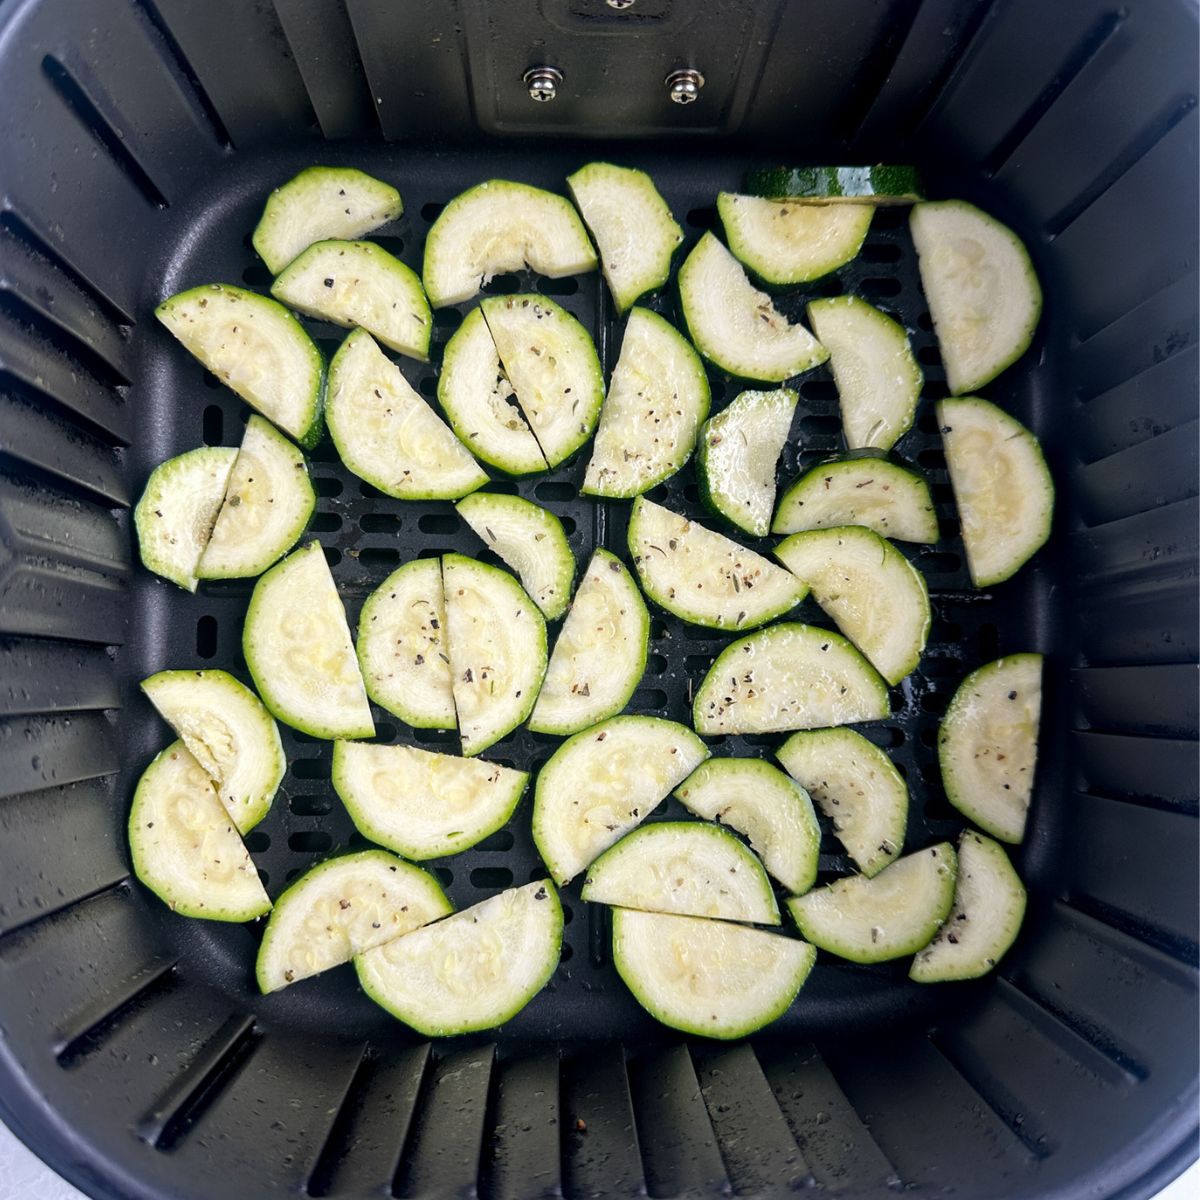 Sliced zucchini in an air fryer basket.